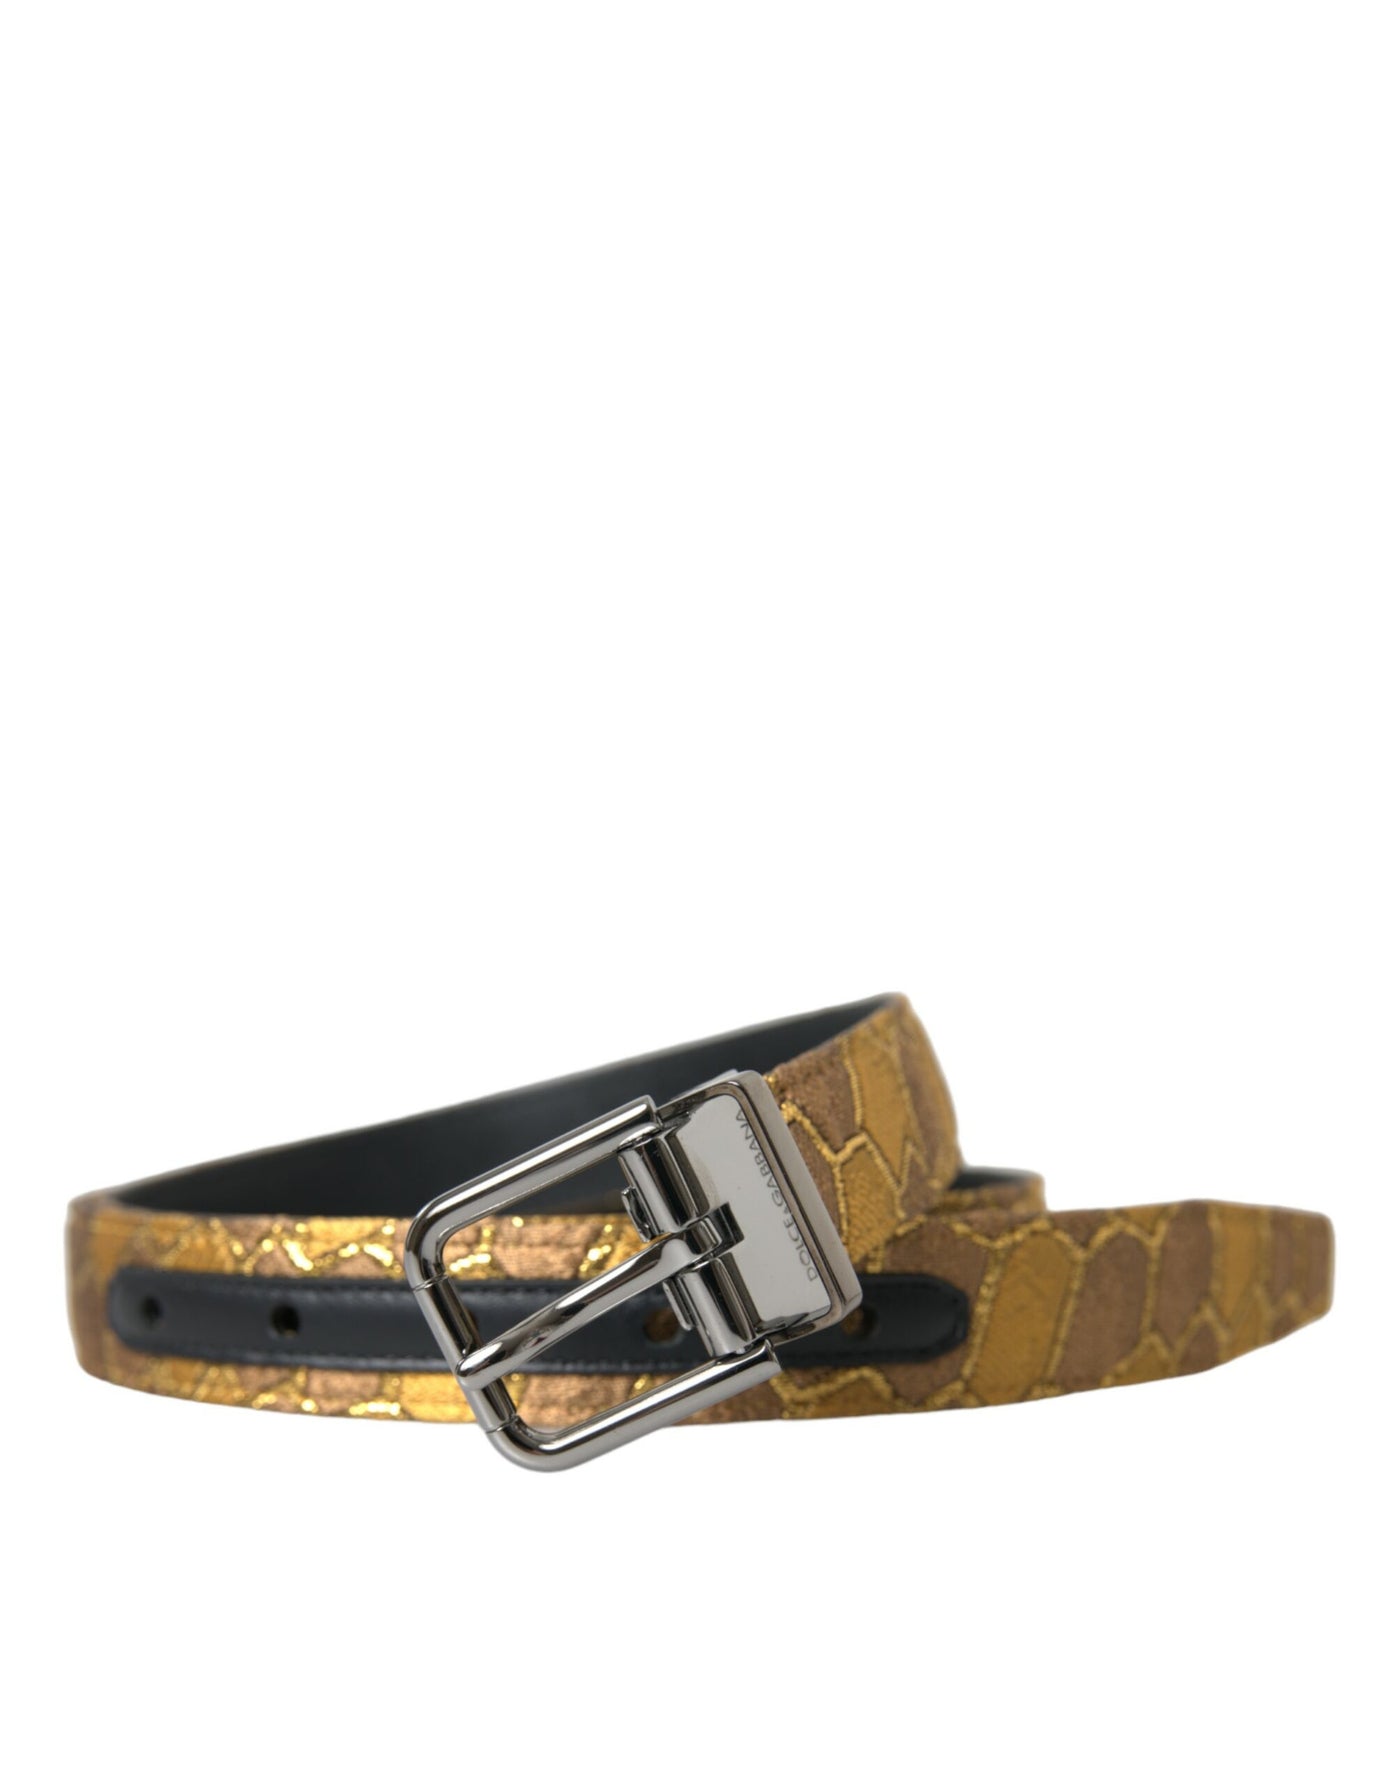 Dolce & Gabbana Gold Leather Jacquard Silver Metal Buckle Belt